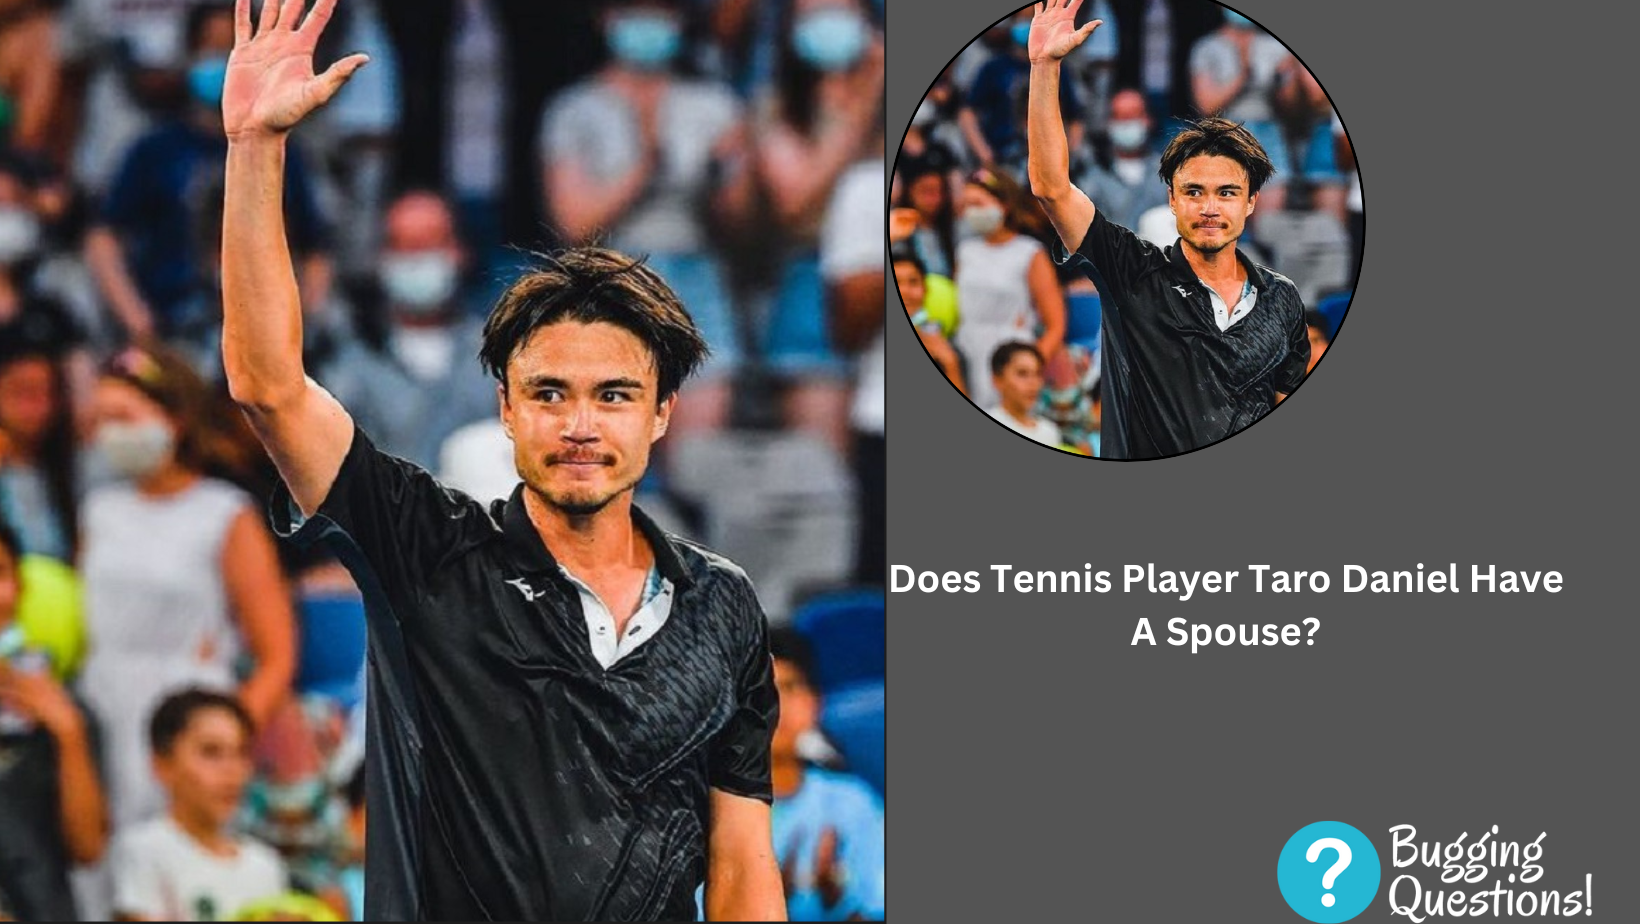 Does Tennis Player Taro Daniel Have A Spouse?